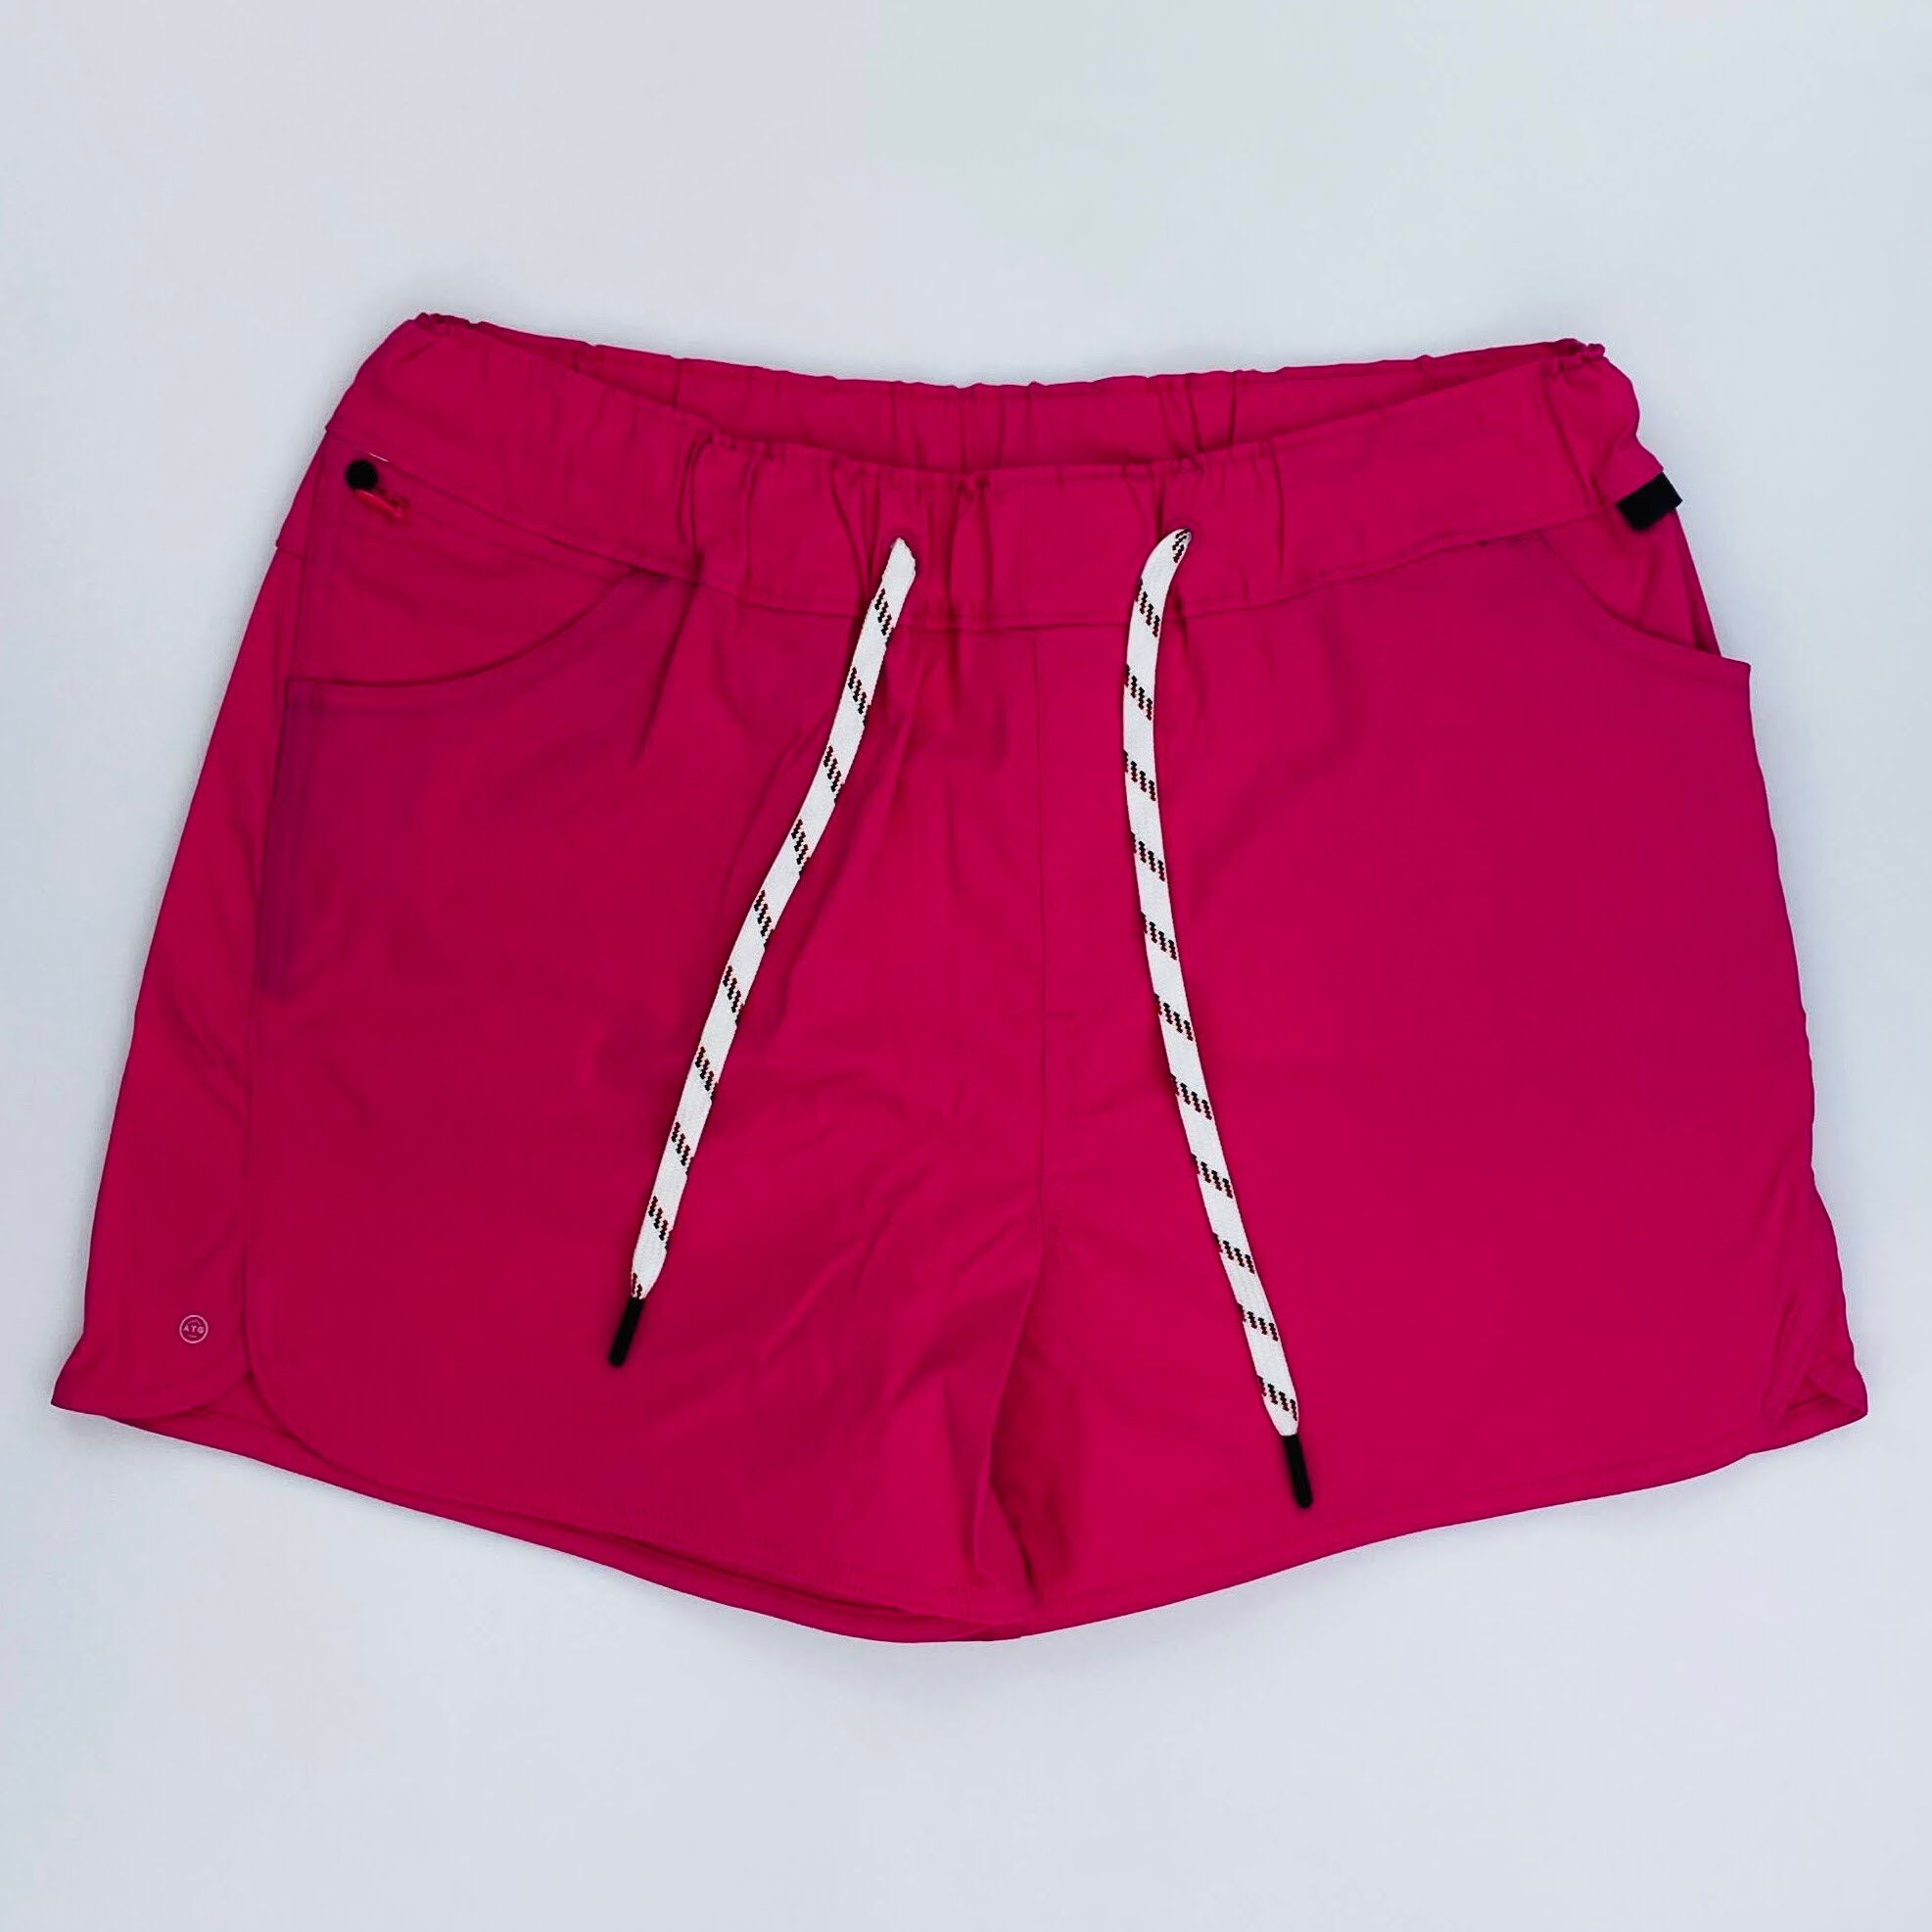 Wrangler Drawstring Short - Second Hand Shorts - Women's - Pink - US 28